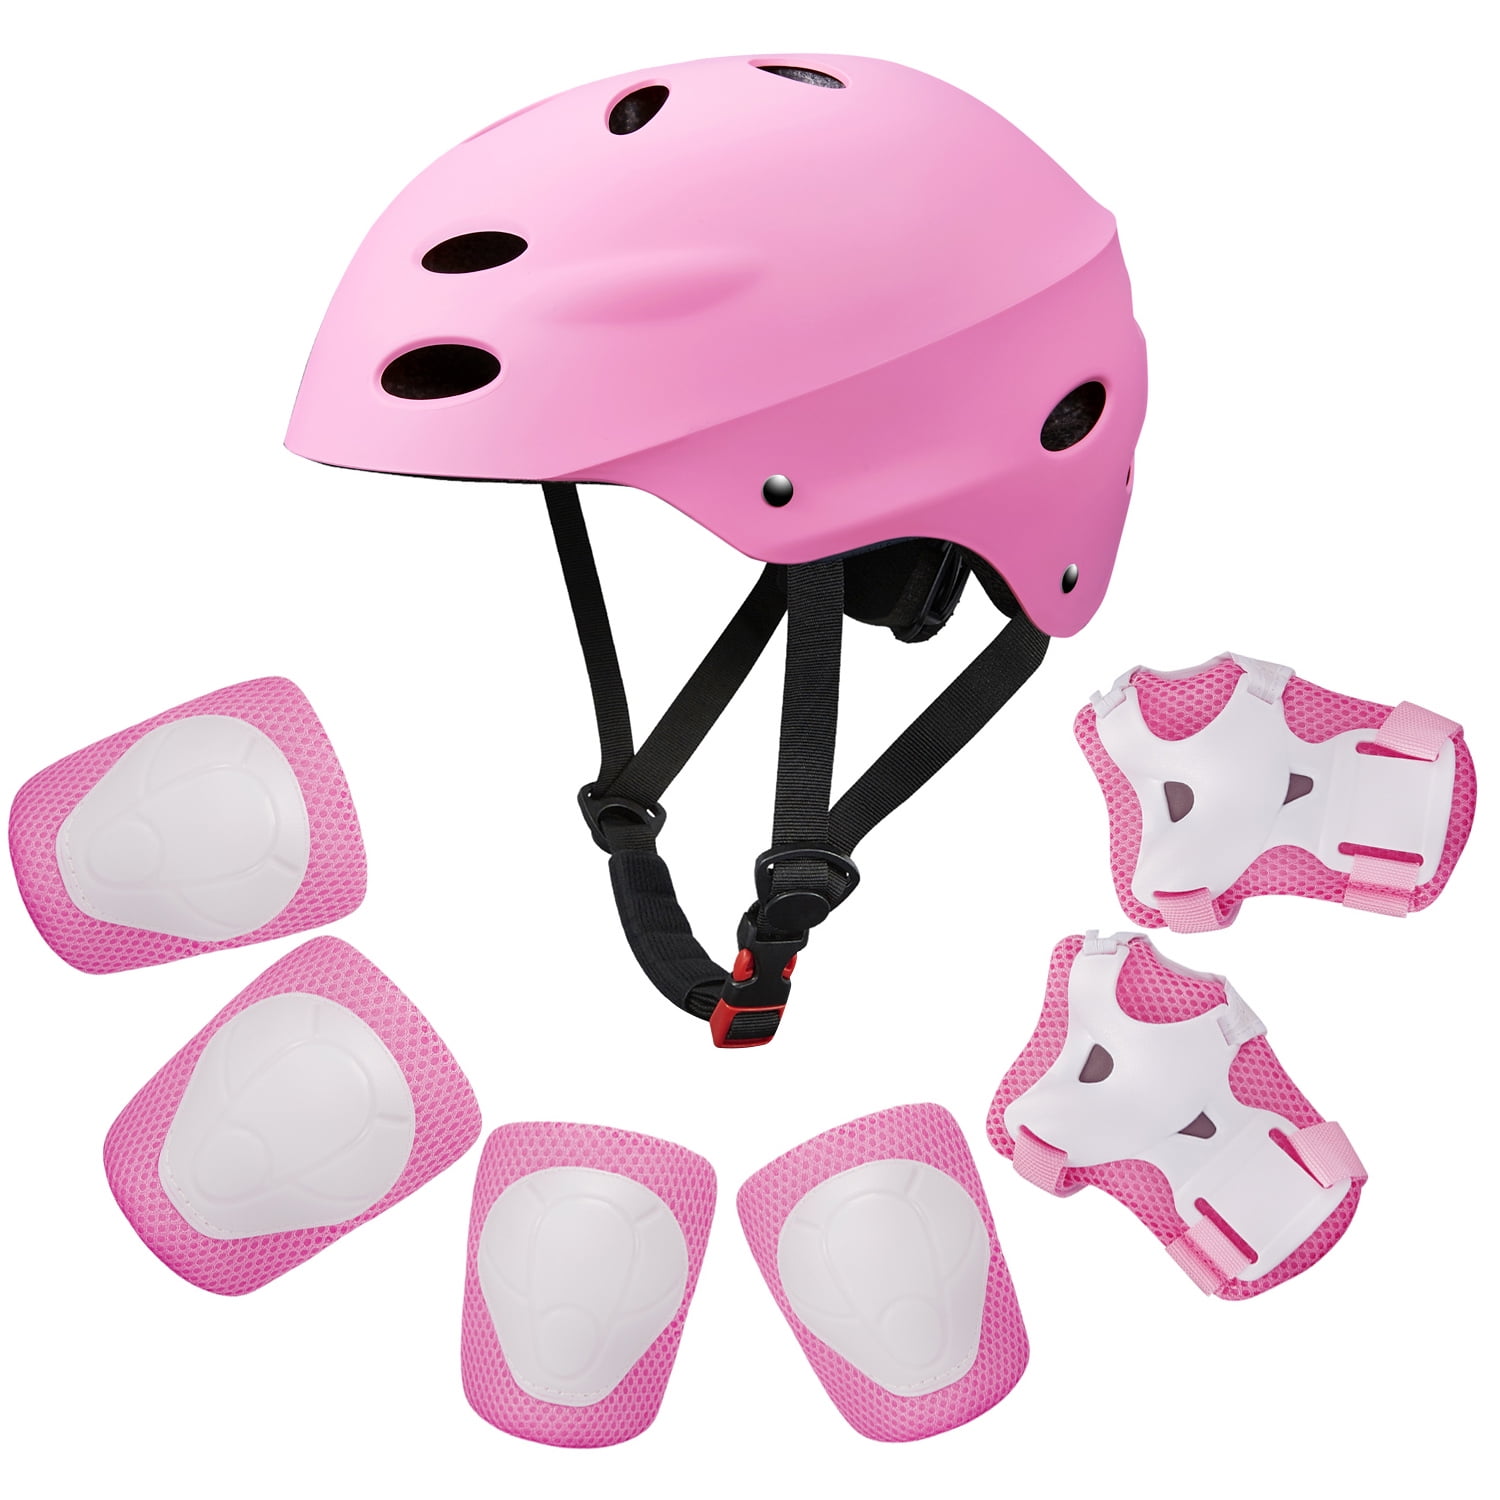 Kids For Skate Cycling Kid Helmet Knee Elbow Pad Set Kids Protective Gear Sets 